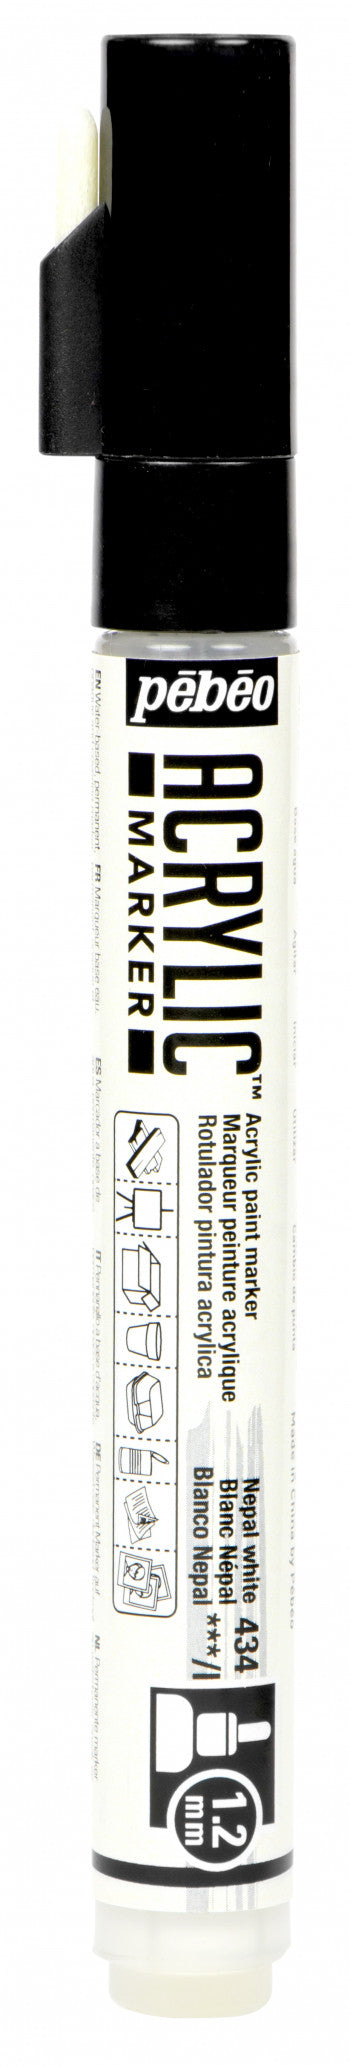 Acrylic Marker 1.2mm Pebeo Nepal White